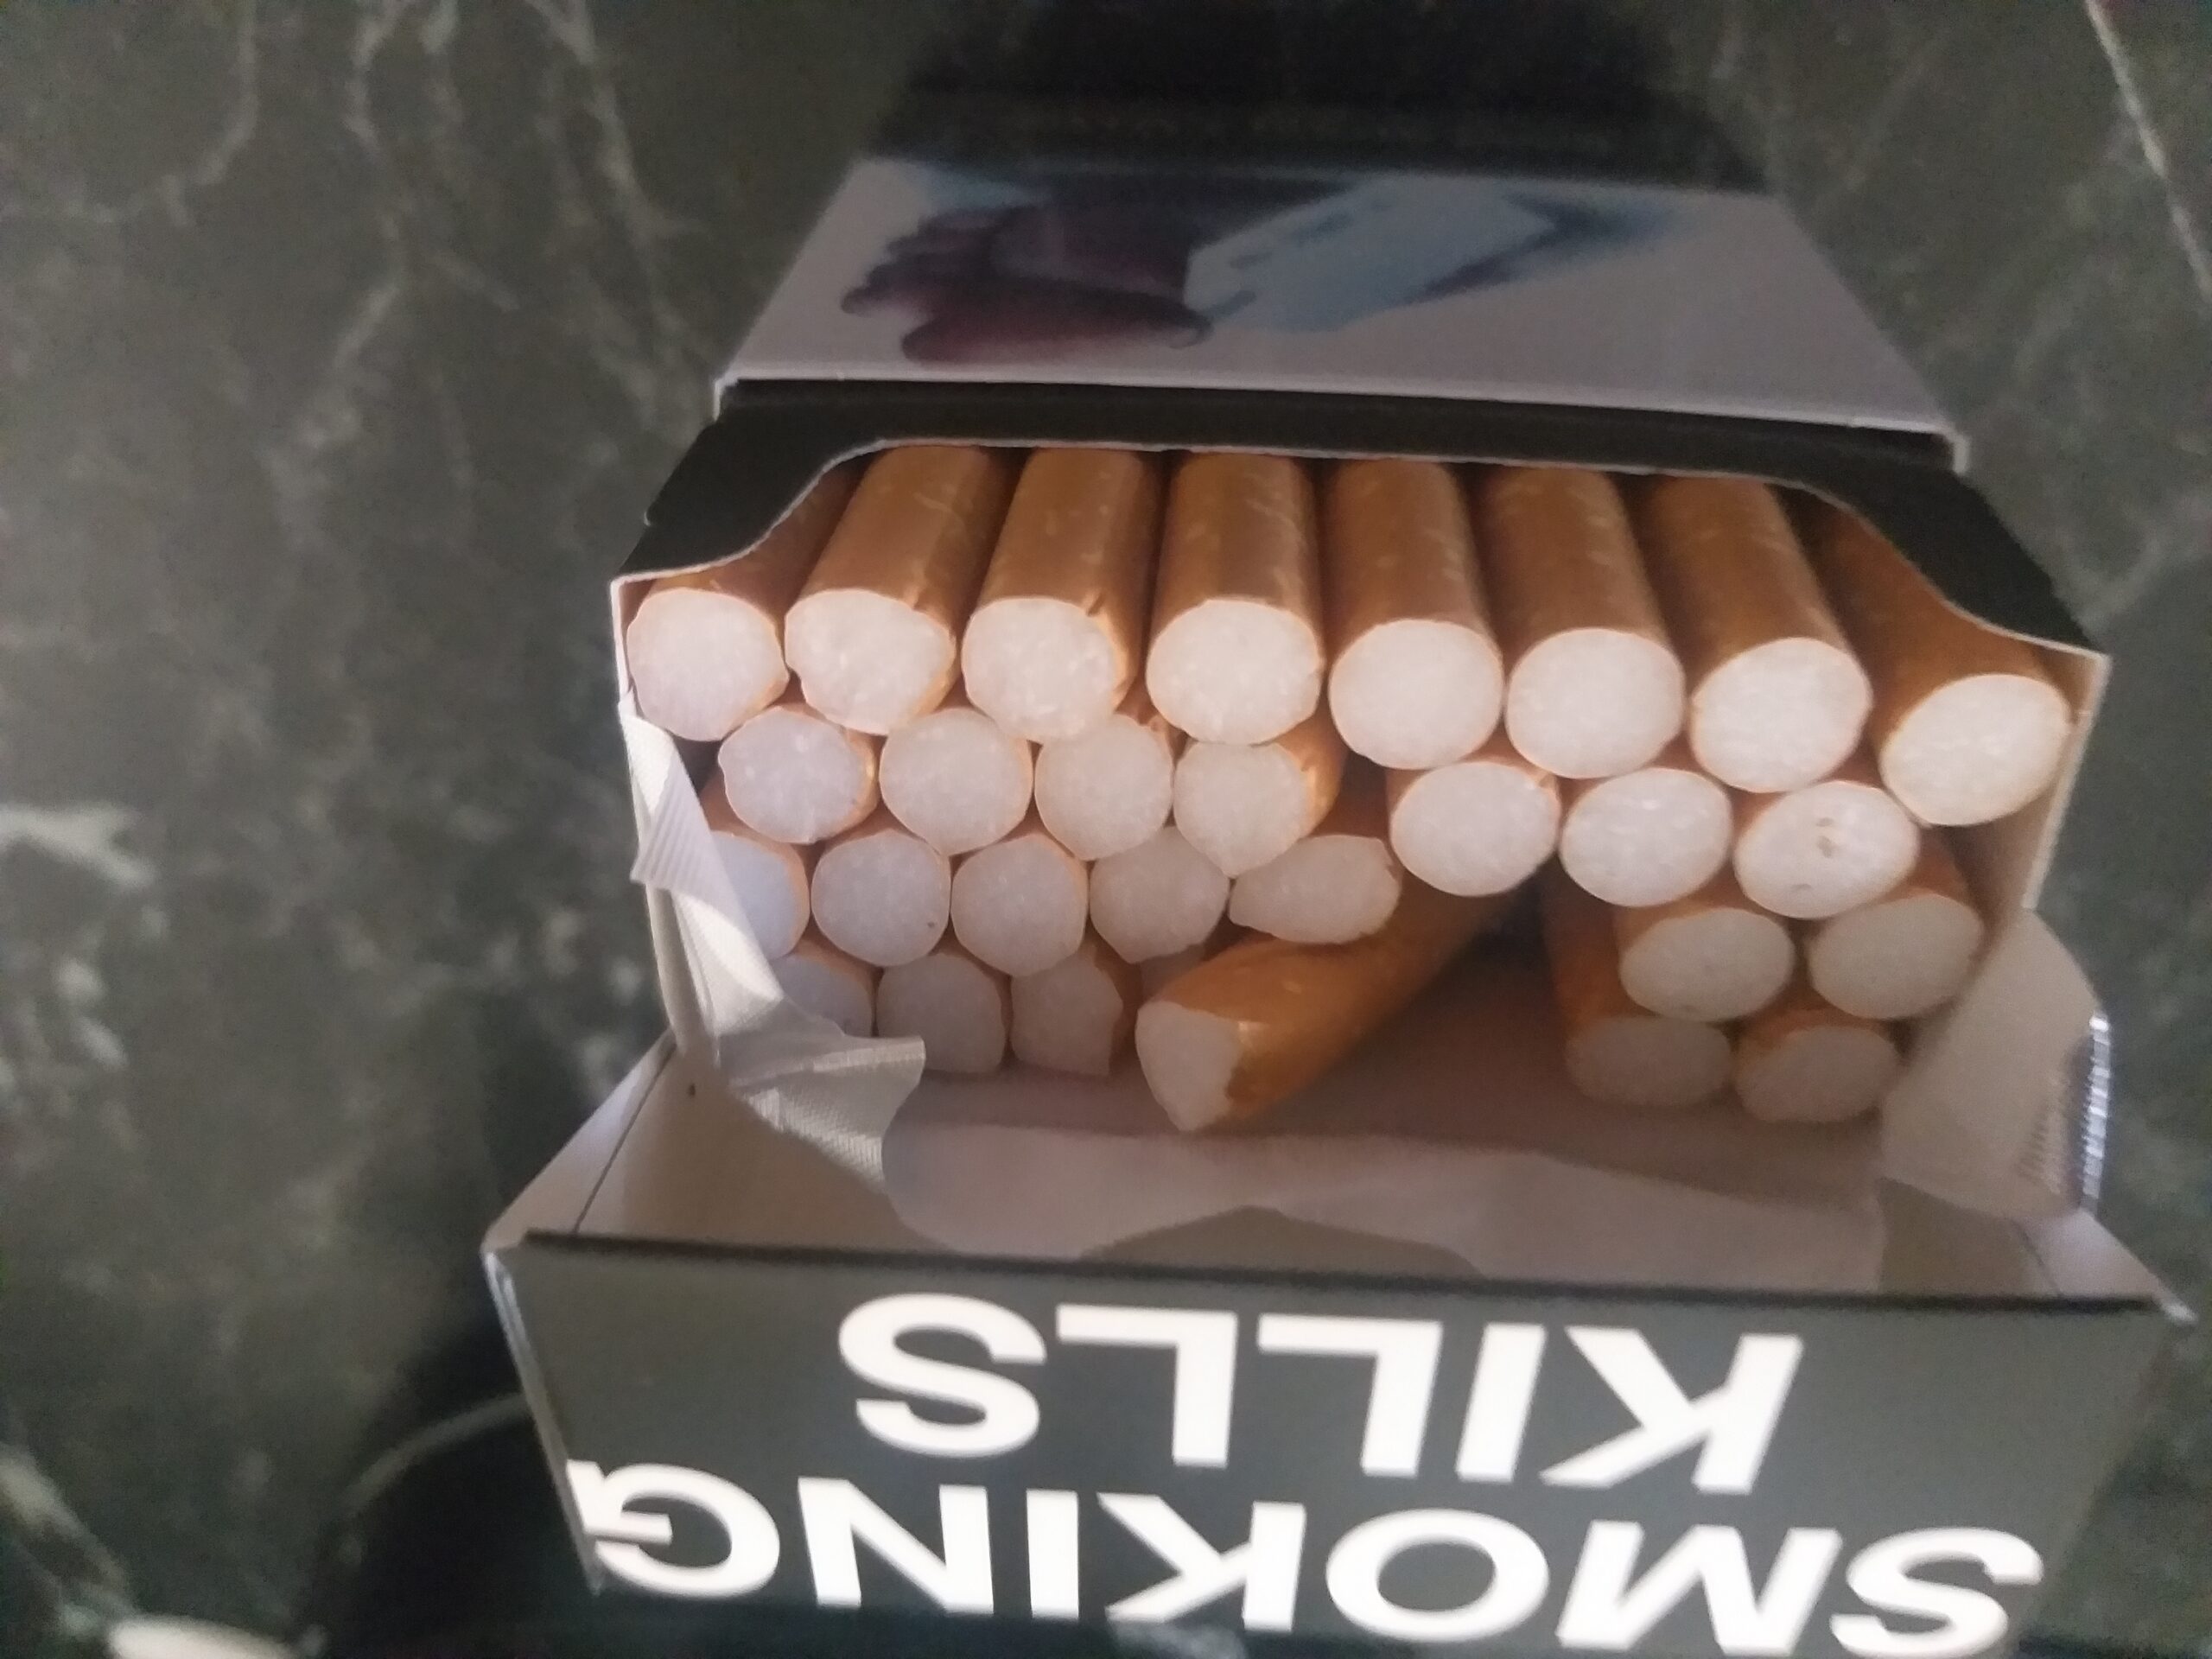 Philip Morris complaint Broken smokes upon opening packet